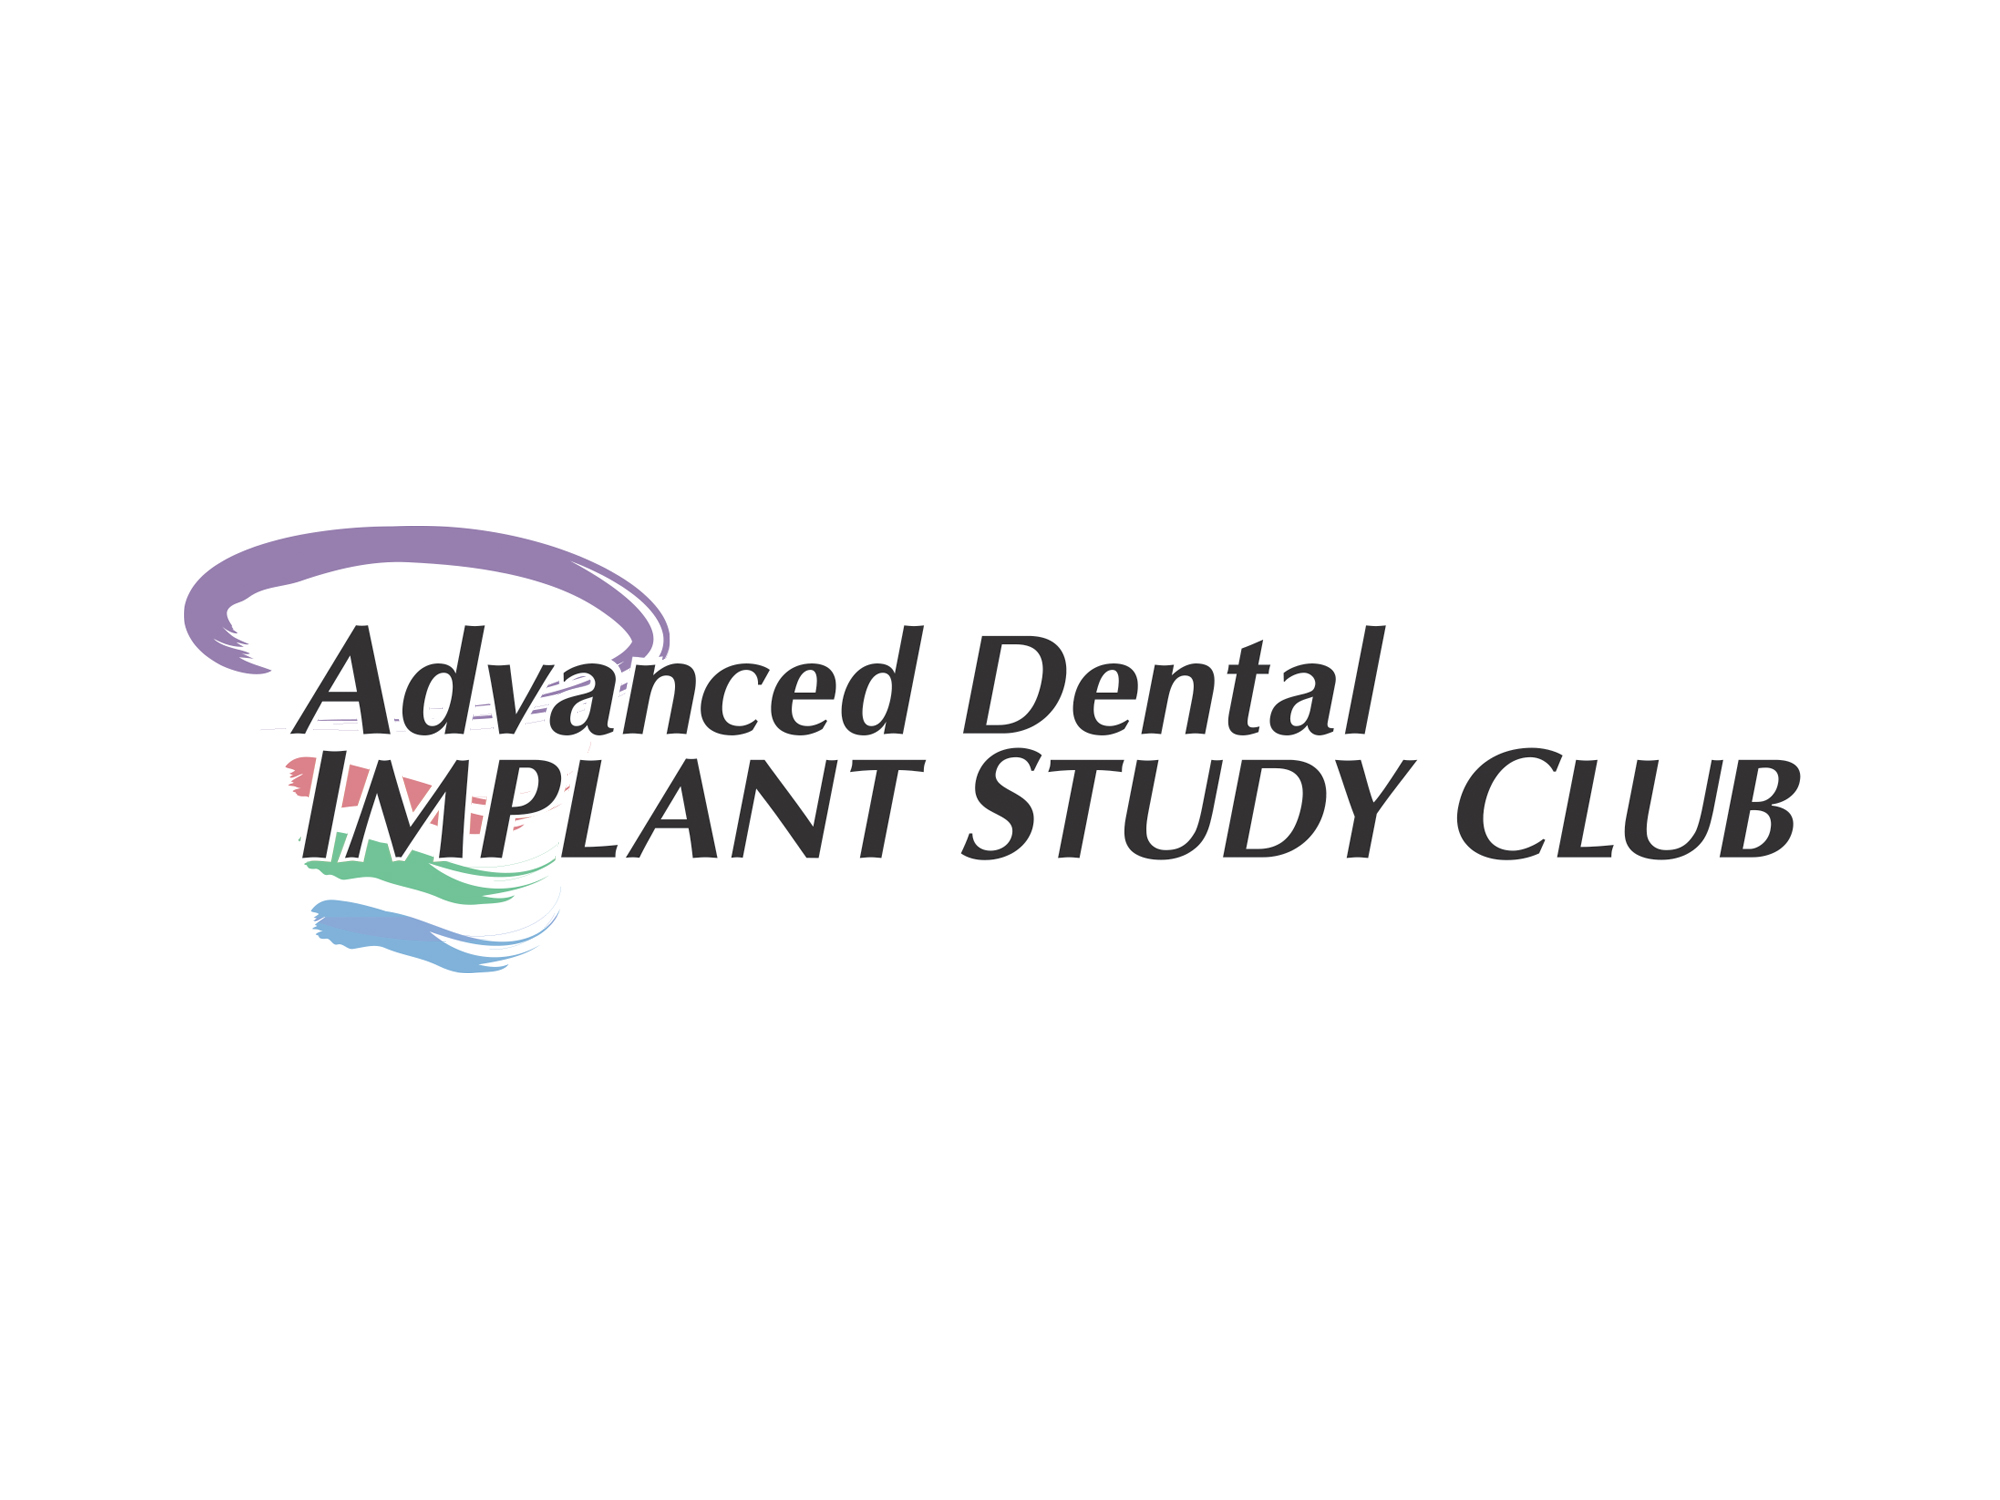 Advanced Dental Implant Study Club, Robert Faulkner, DDS, 2013.